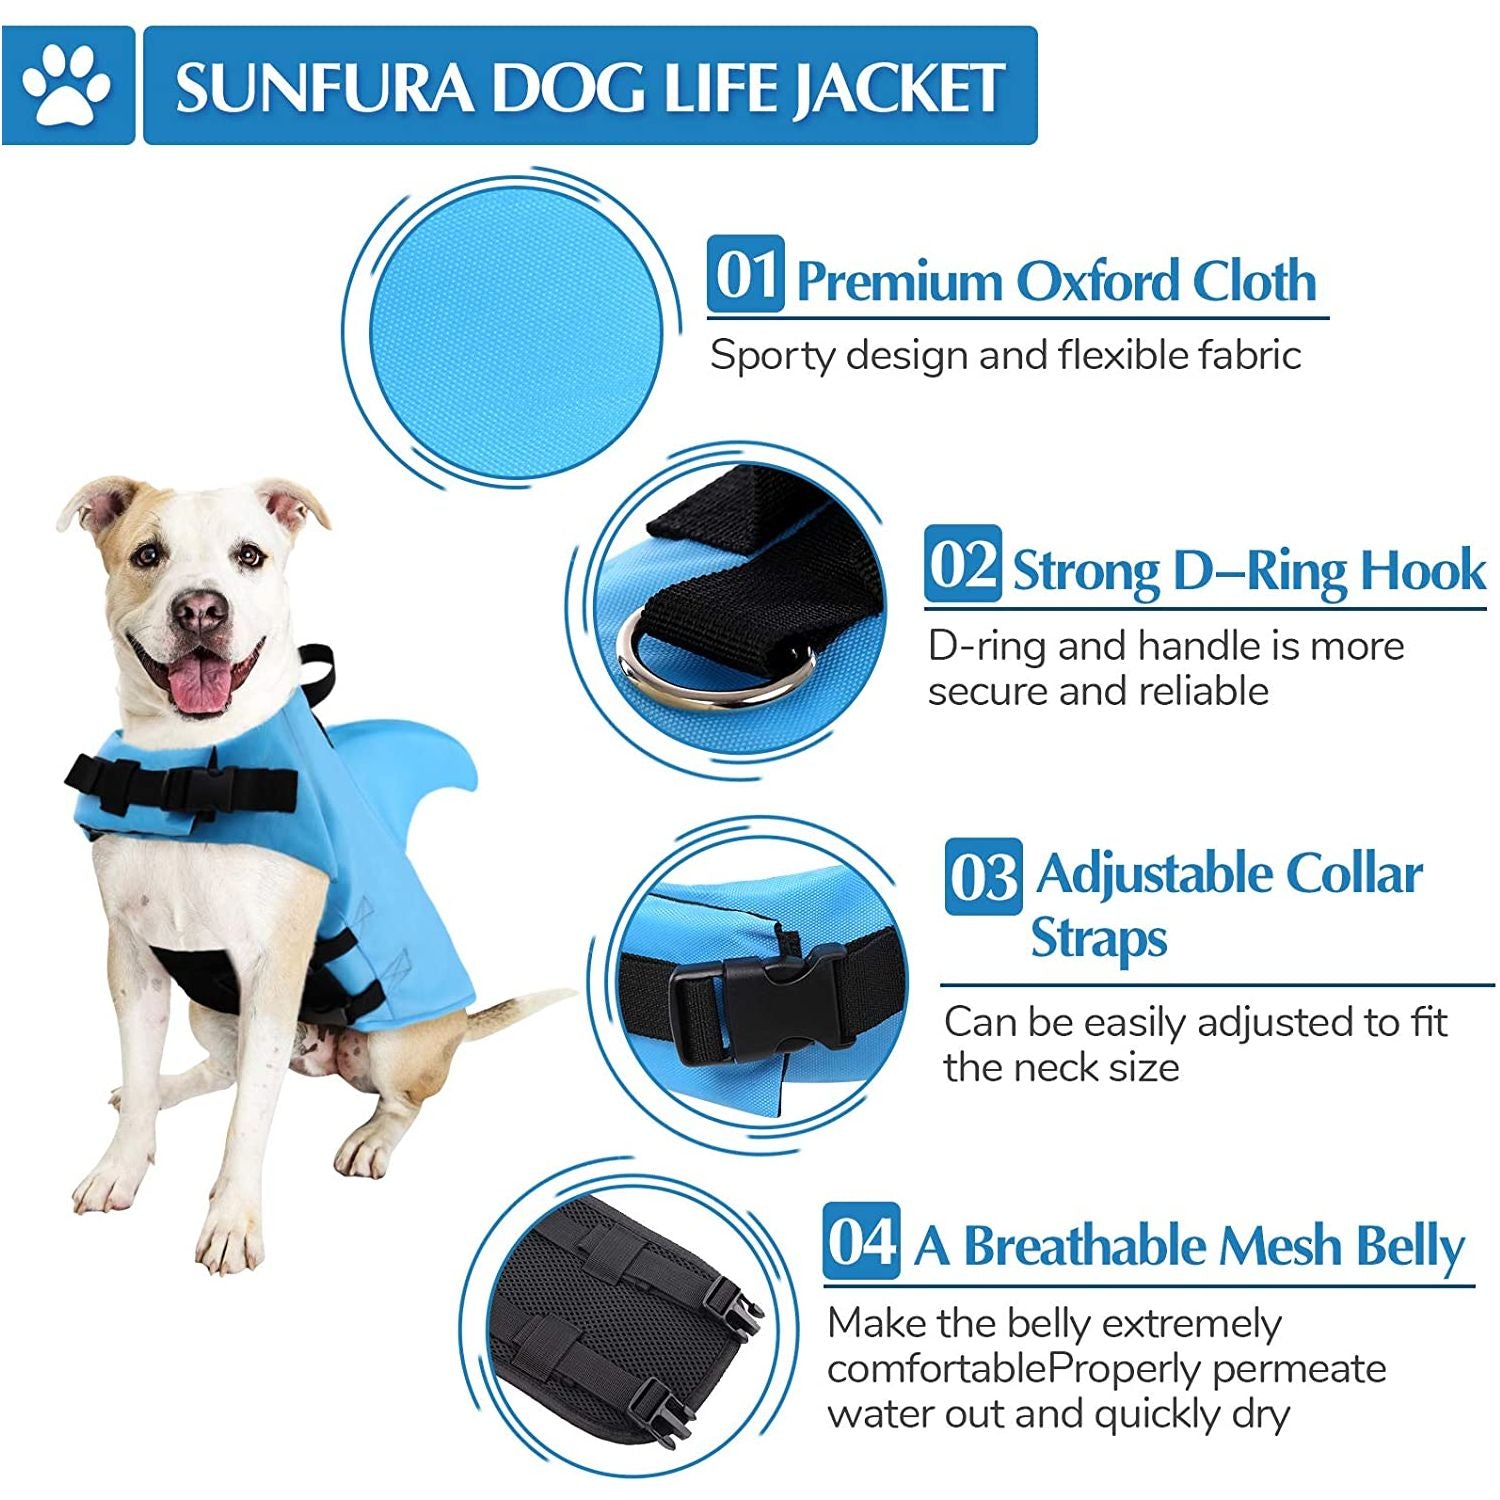 Dog Life Jacket - Sunny Sydney Australia - Famous Outdoor Gear Store